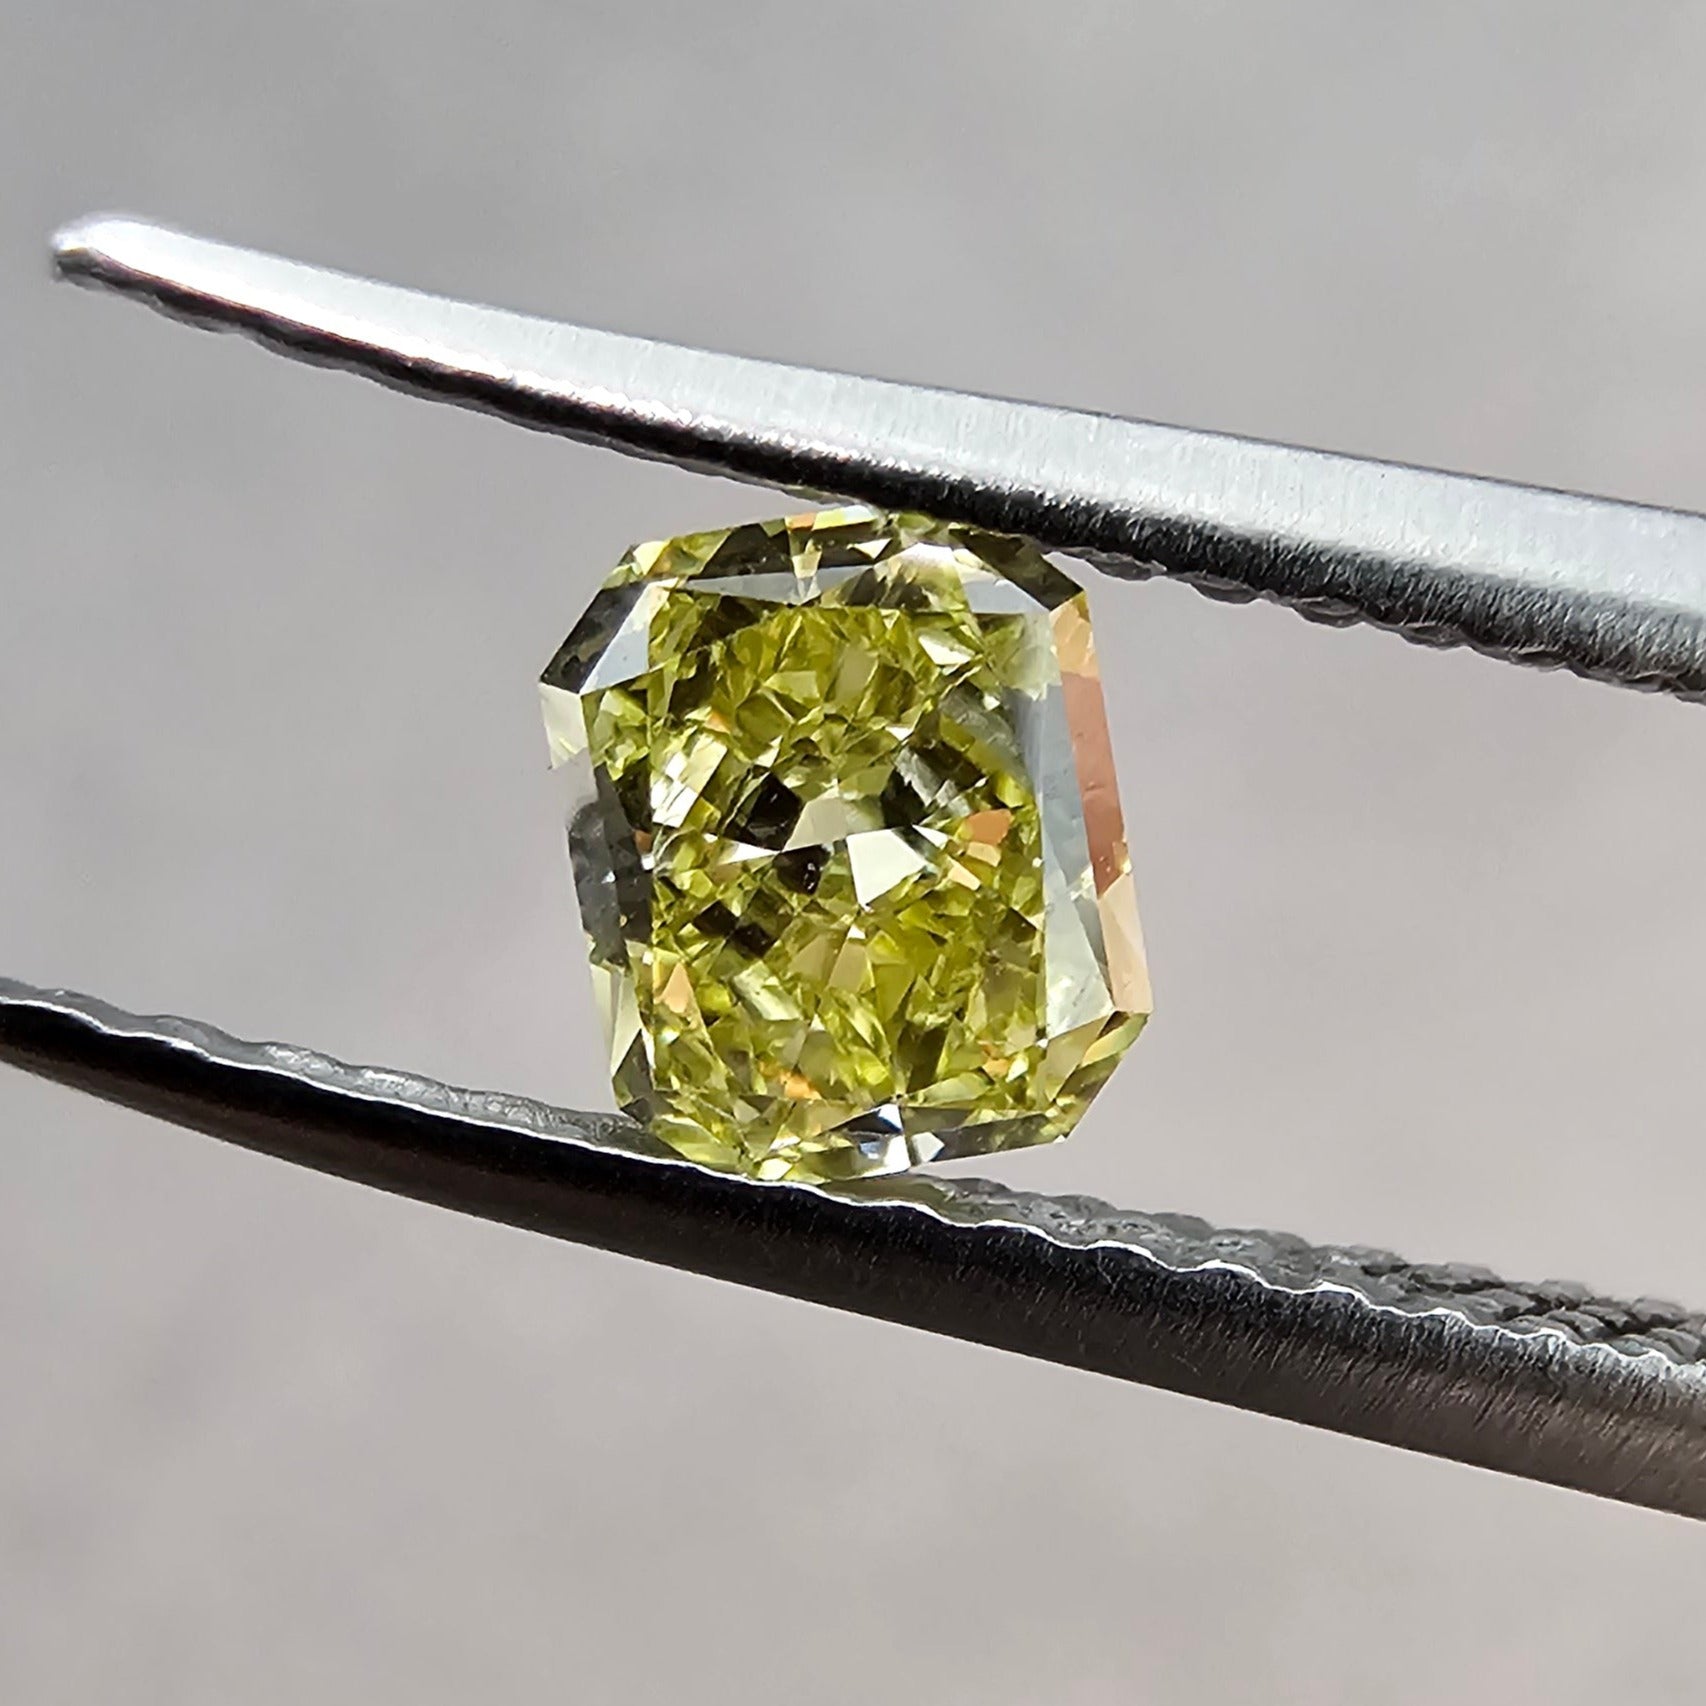 1.50 Carat Radiant Cut Diamond  GIA Certified Diamond  Fancy Intense Yellow  VVS2 Clarity 